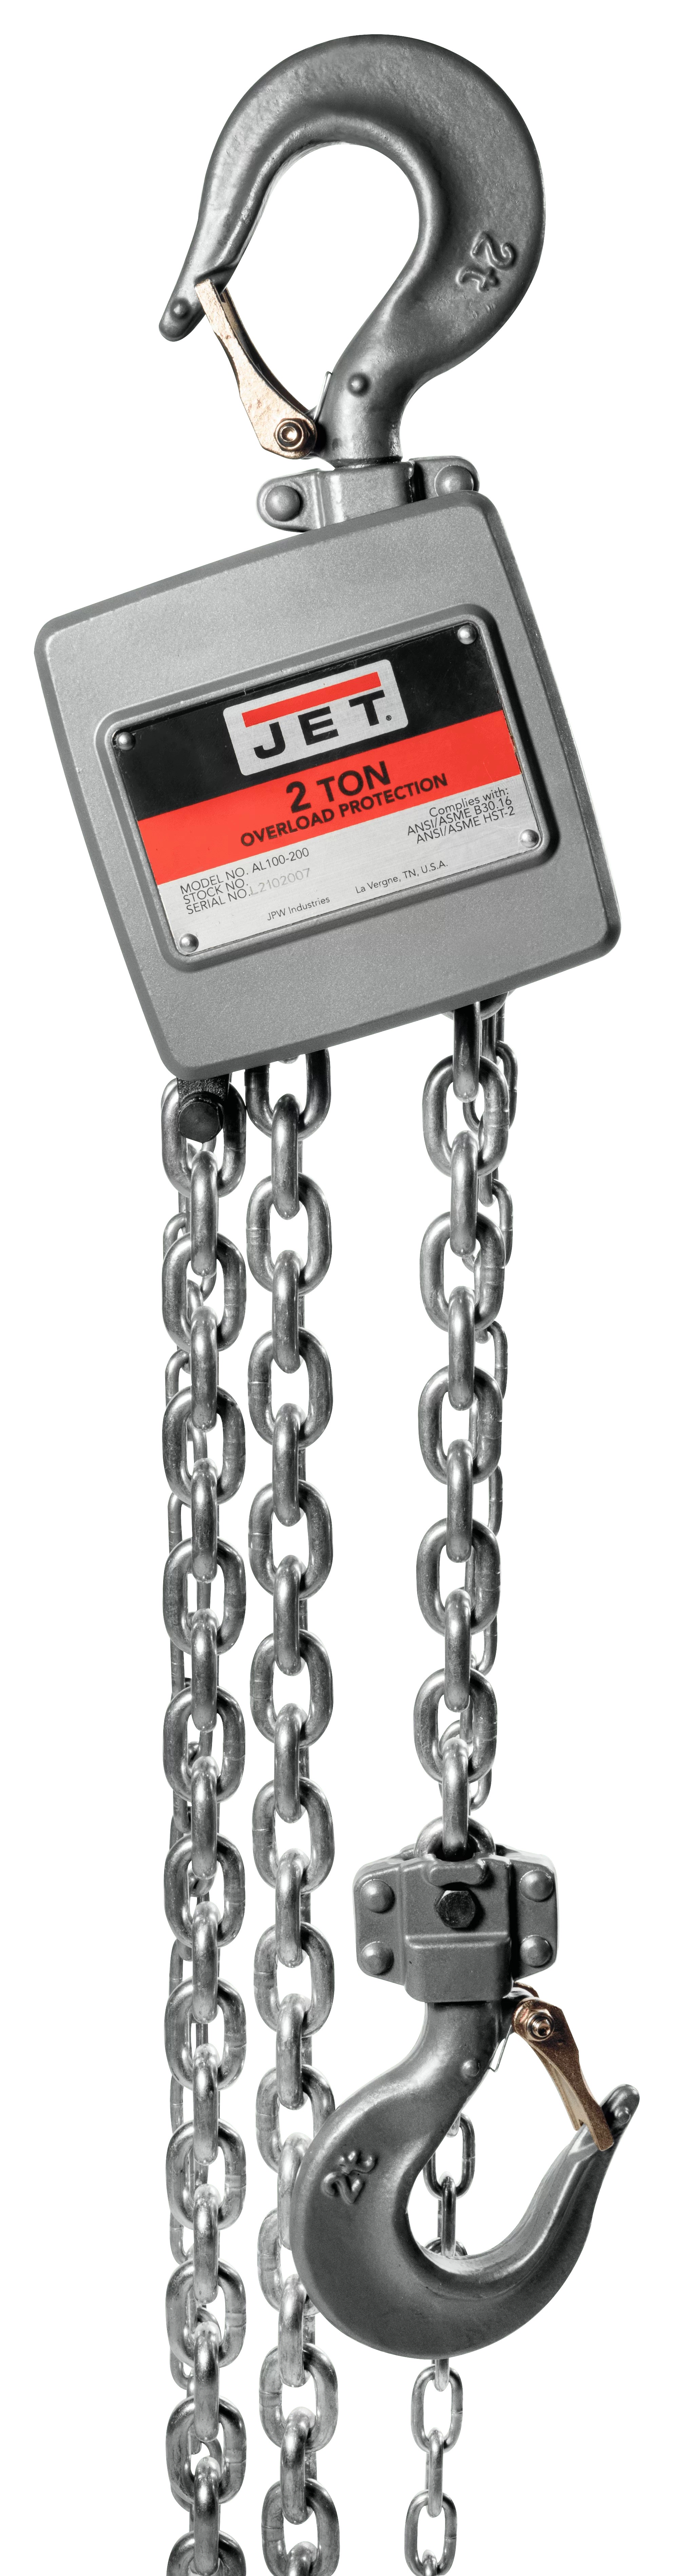 AL100-200-10 2 Ton Aluminum Hand Chain Hoist with 10ft of Lift